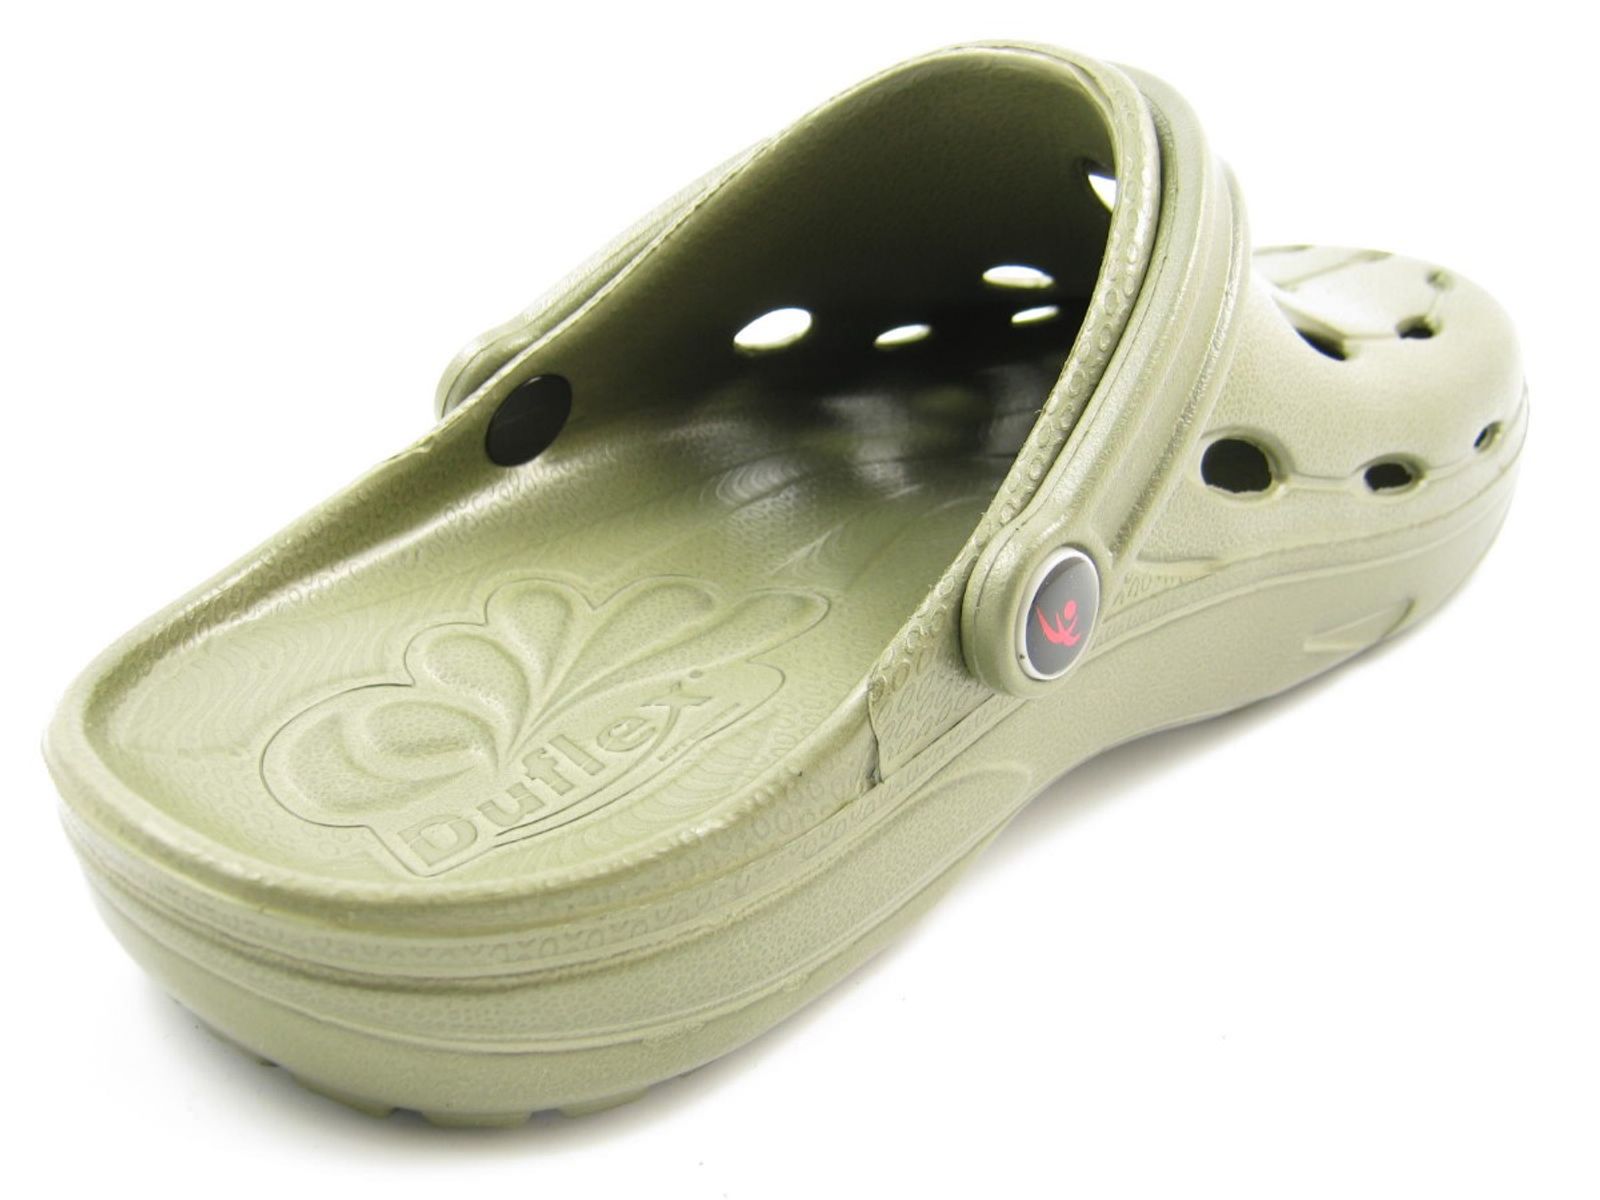 Schuh von chung shi, 43